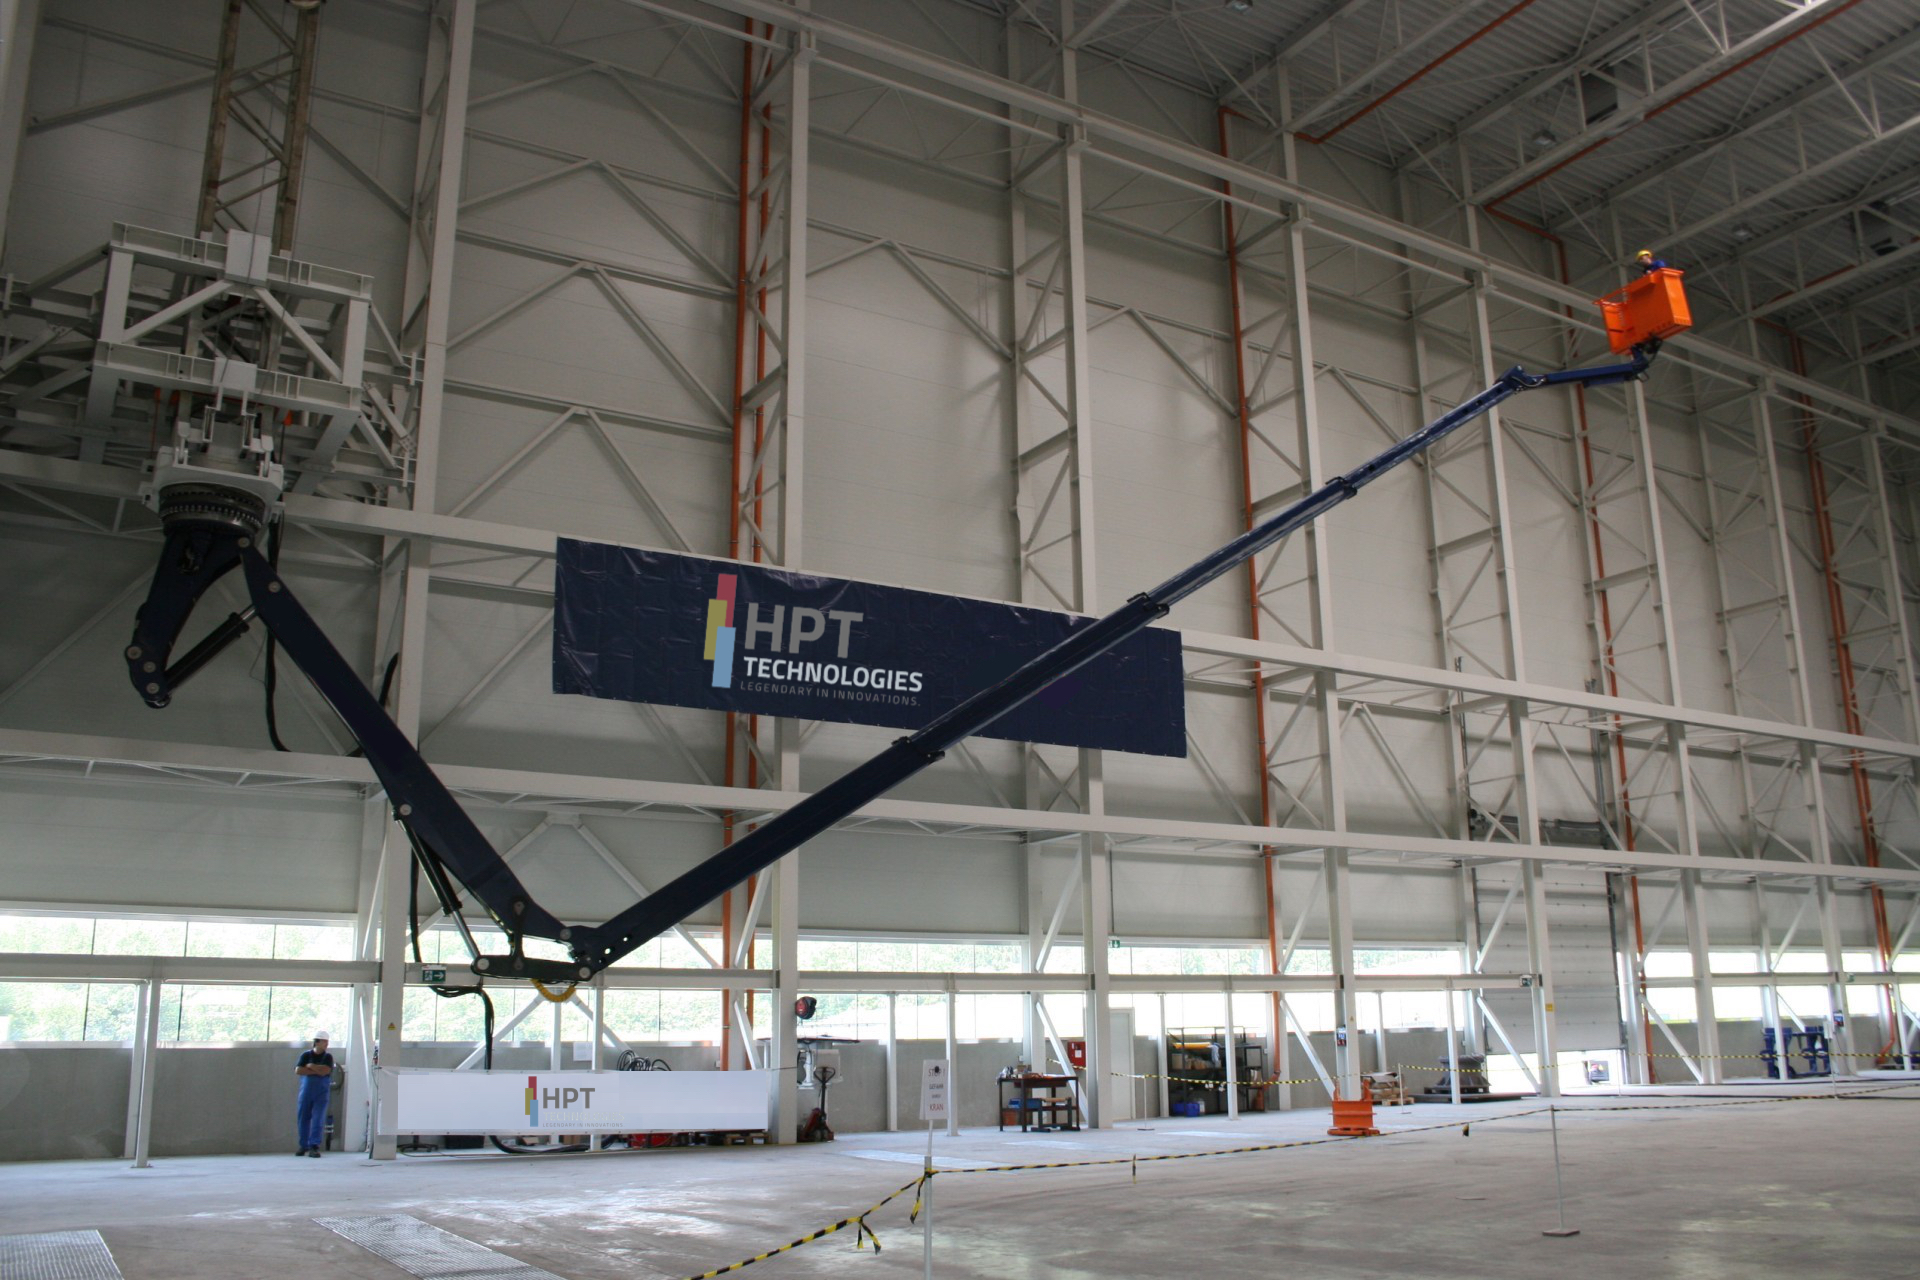 HPT Technologies